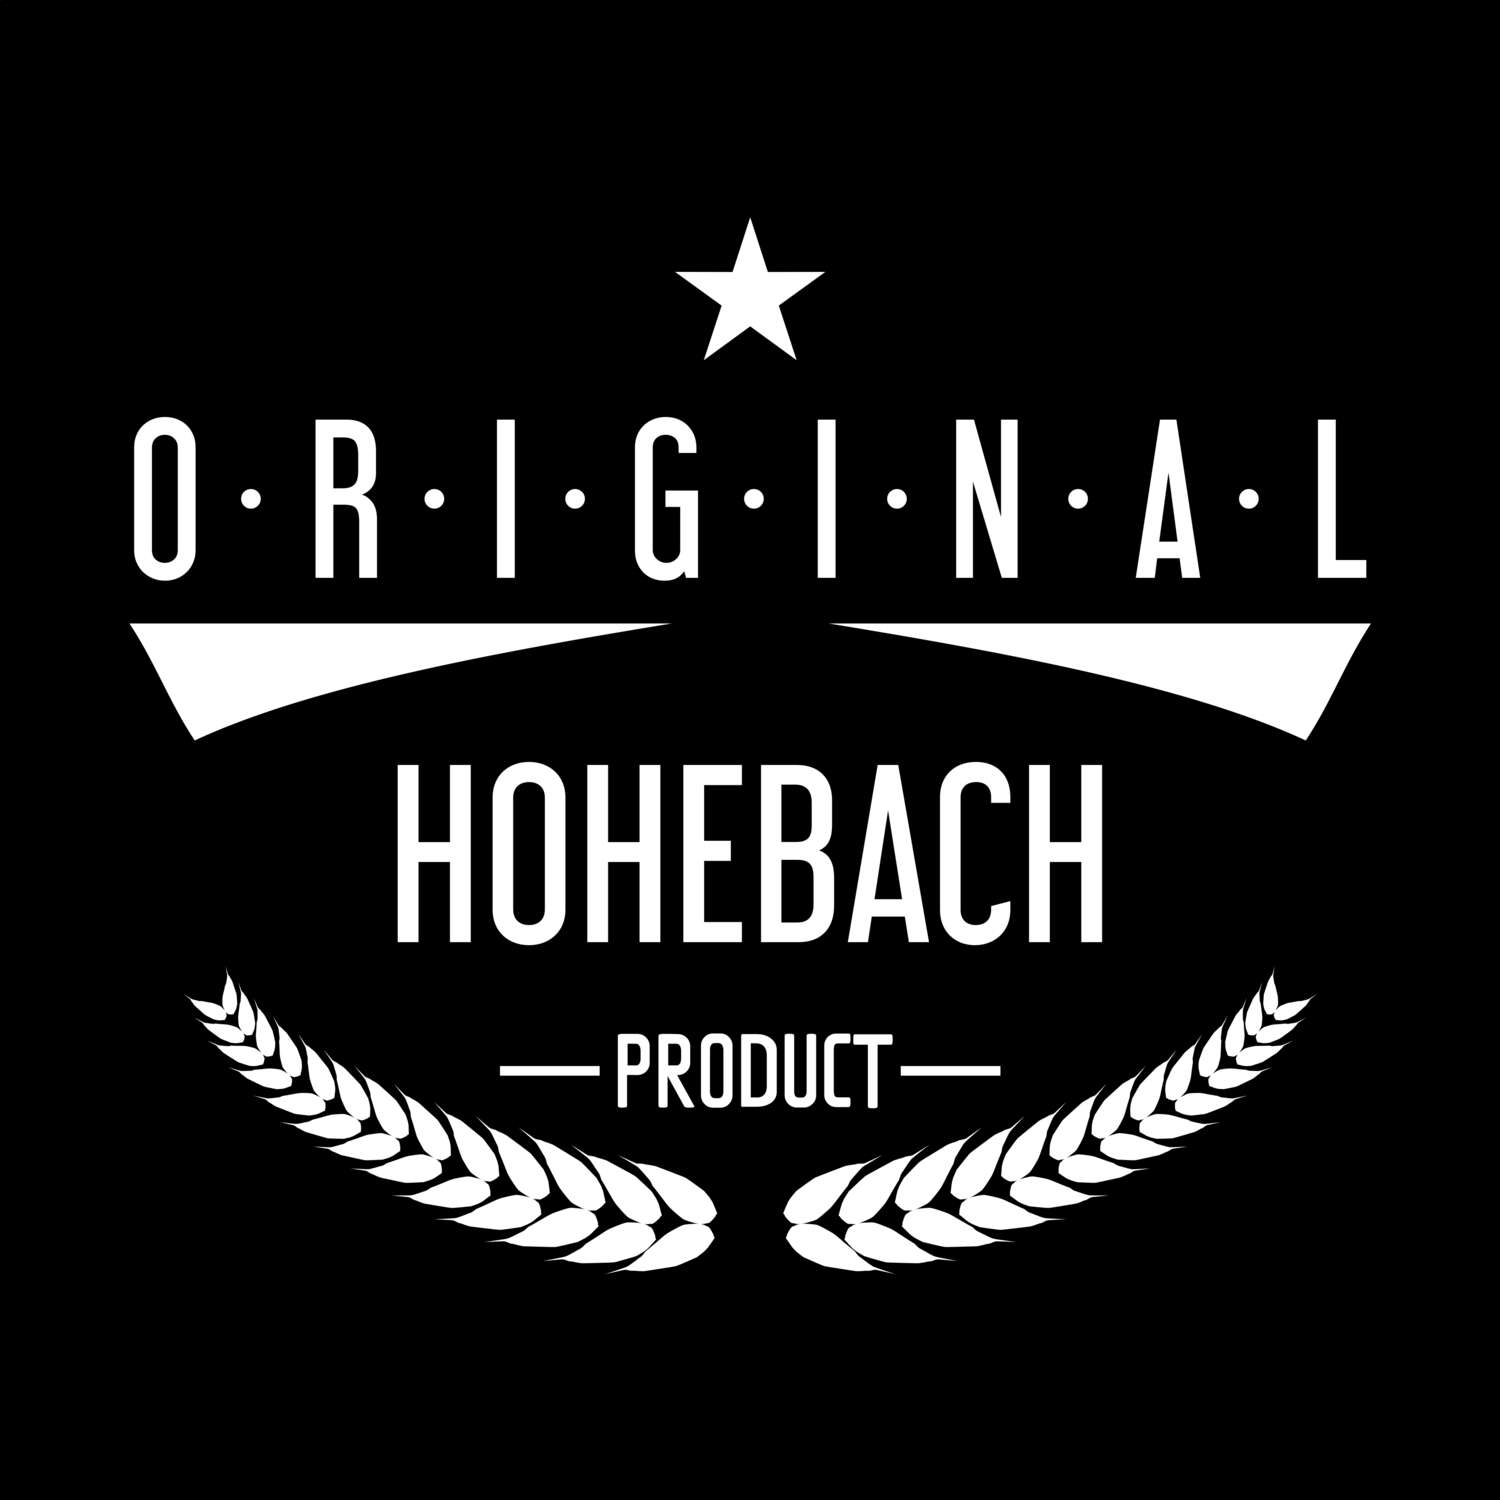 Hohebach T-Shirt »Original Product«